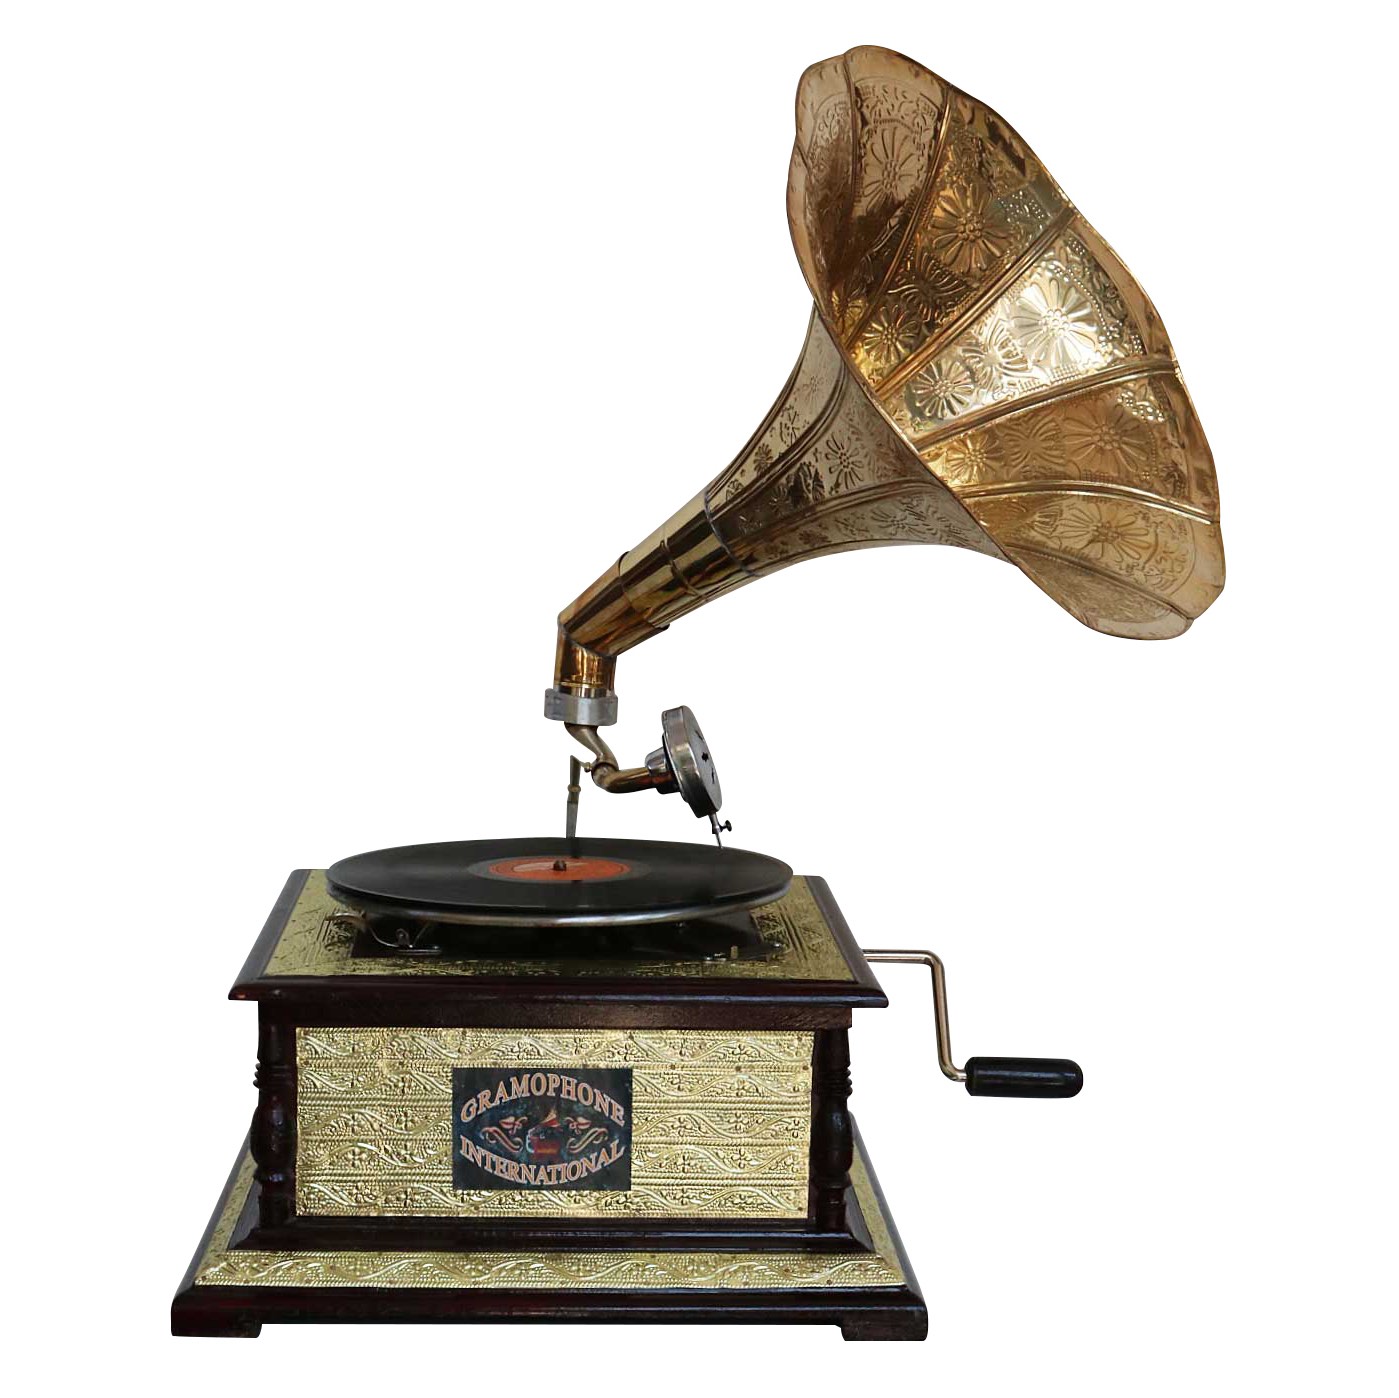 Nostalgie Grammophon Gramophone Schellackplatten Trichter Grammofon Antik-Stil 